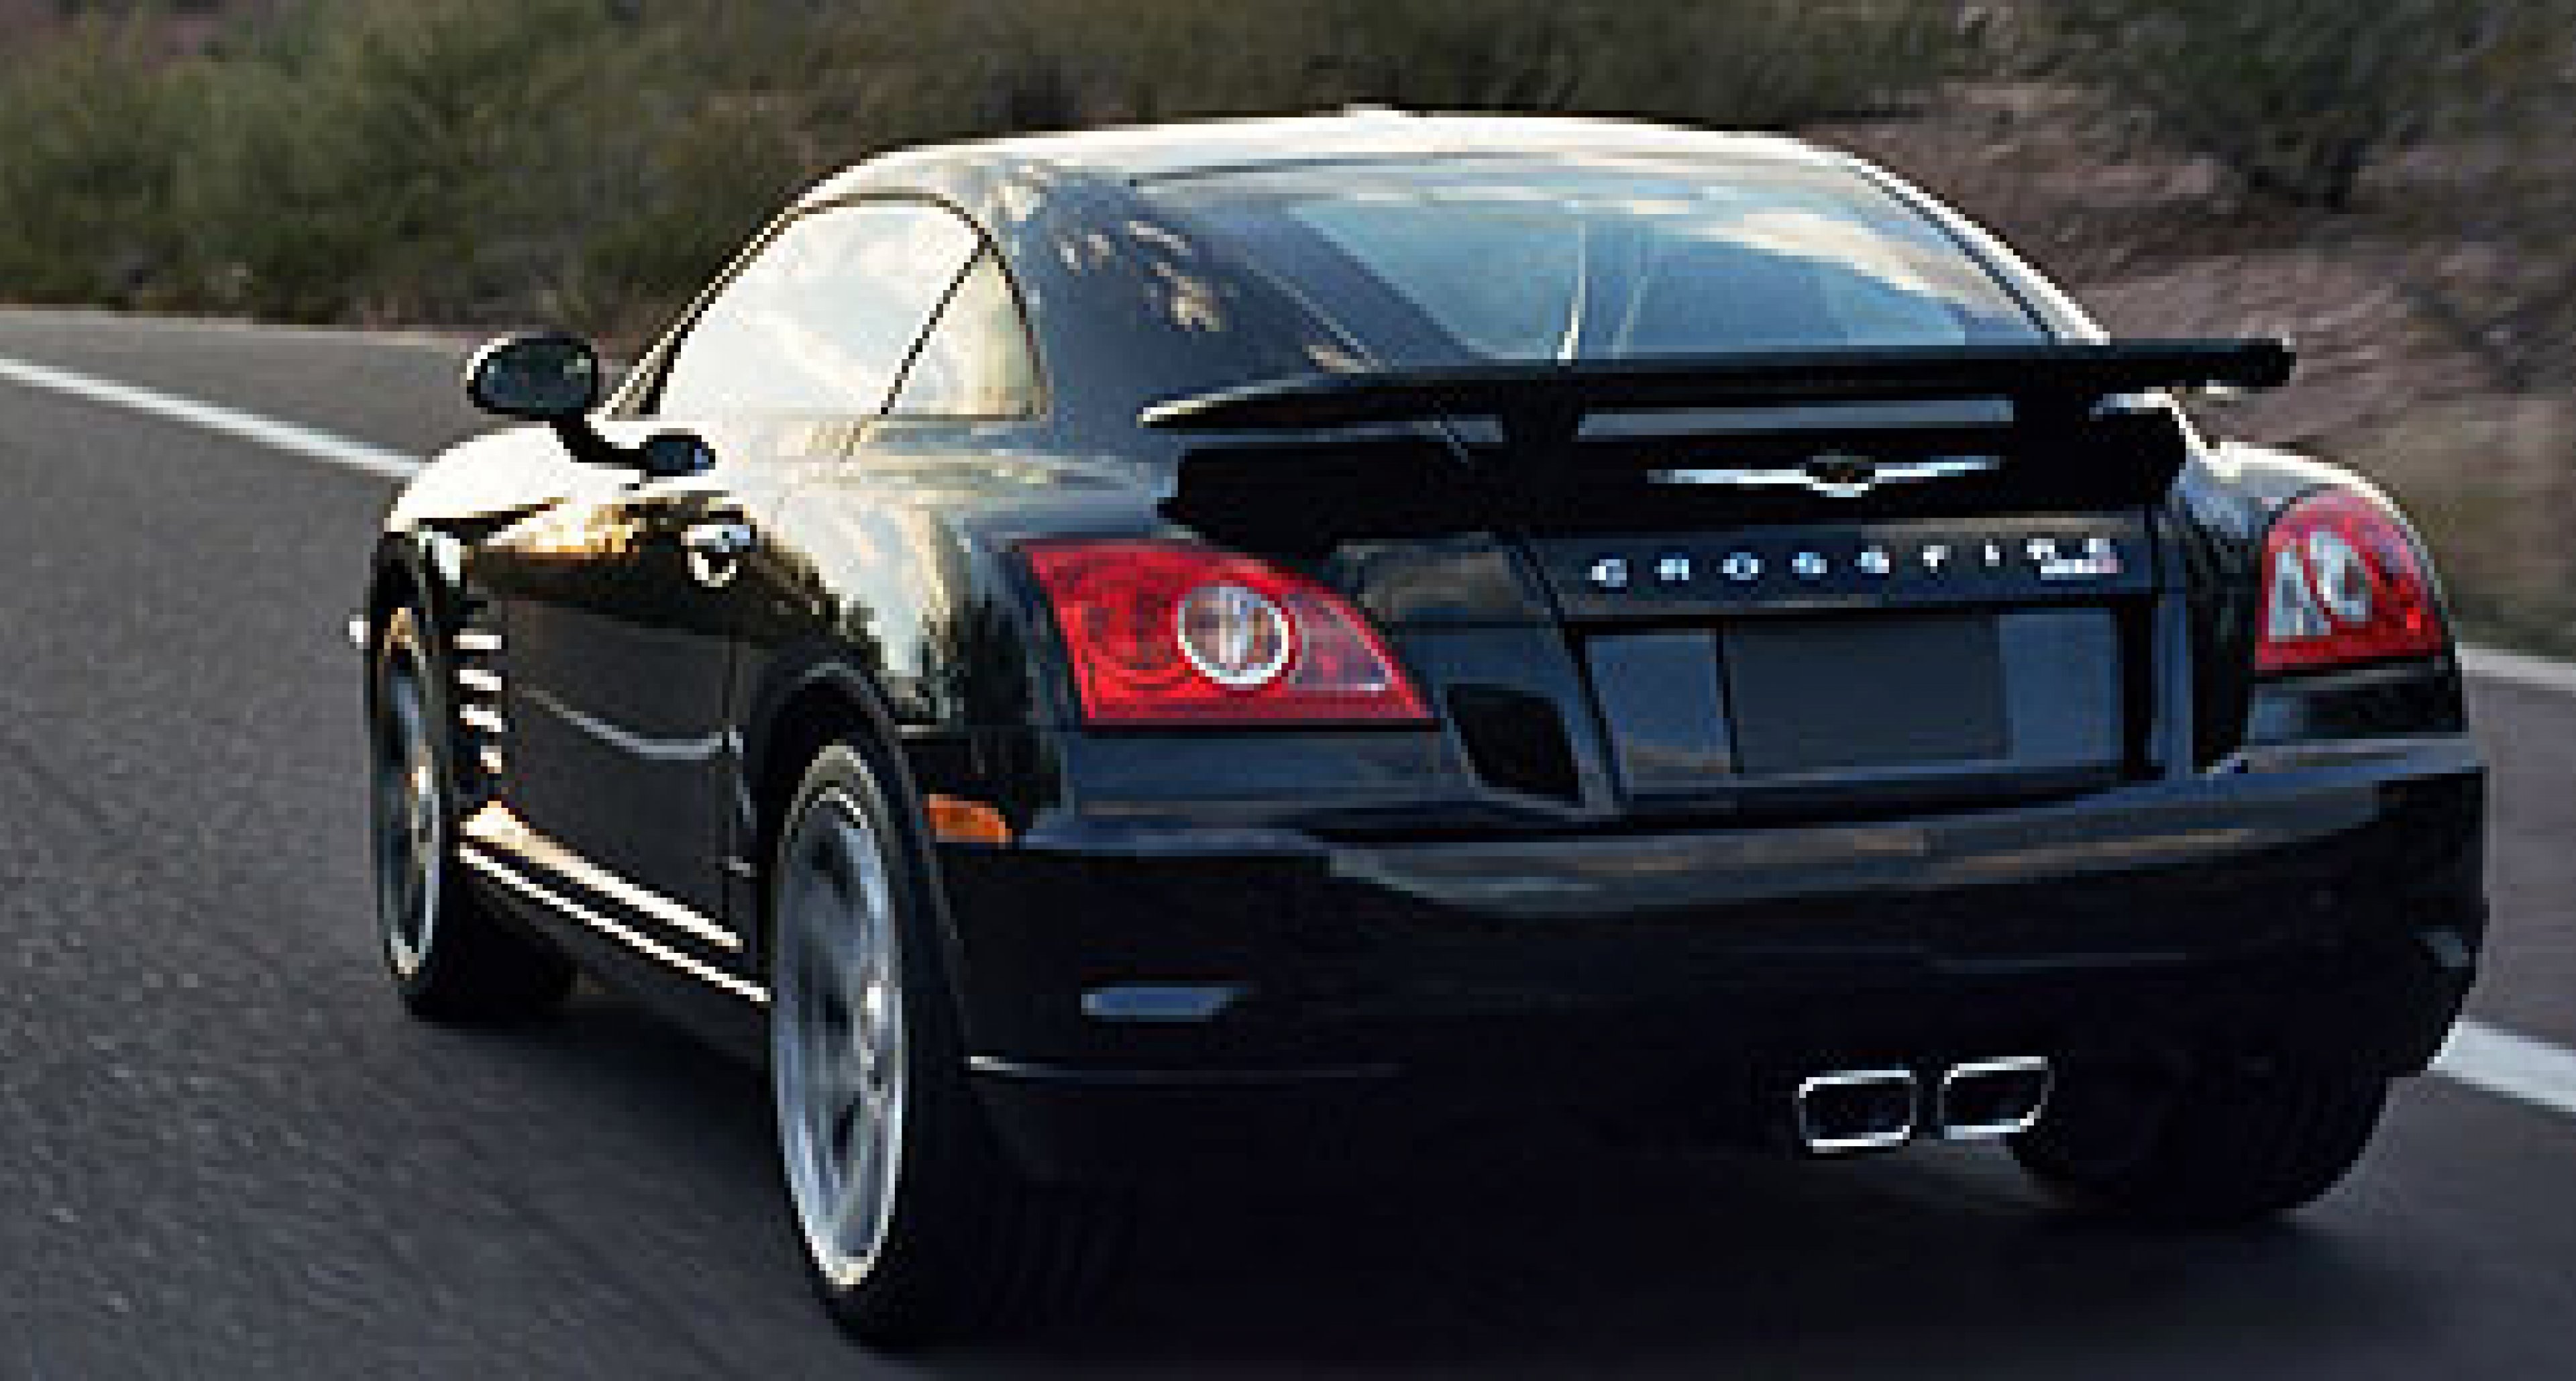 Chrysler Crossfire Srt 6 Erster Chrysler Mit Srt Emblem